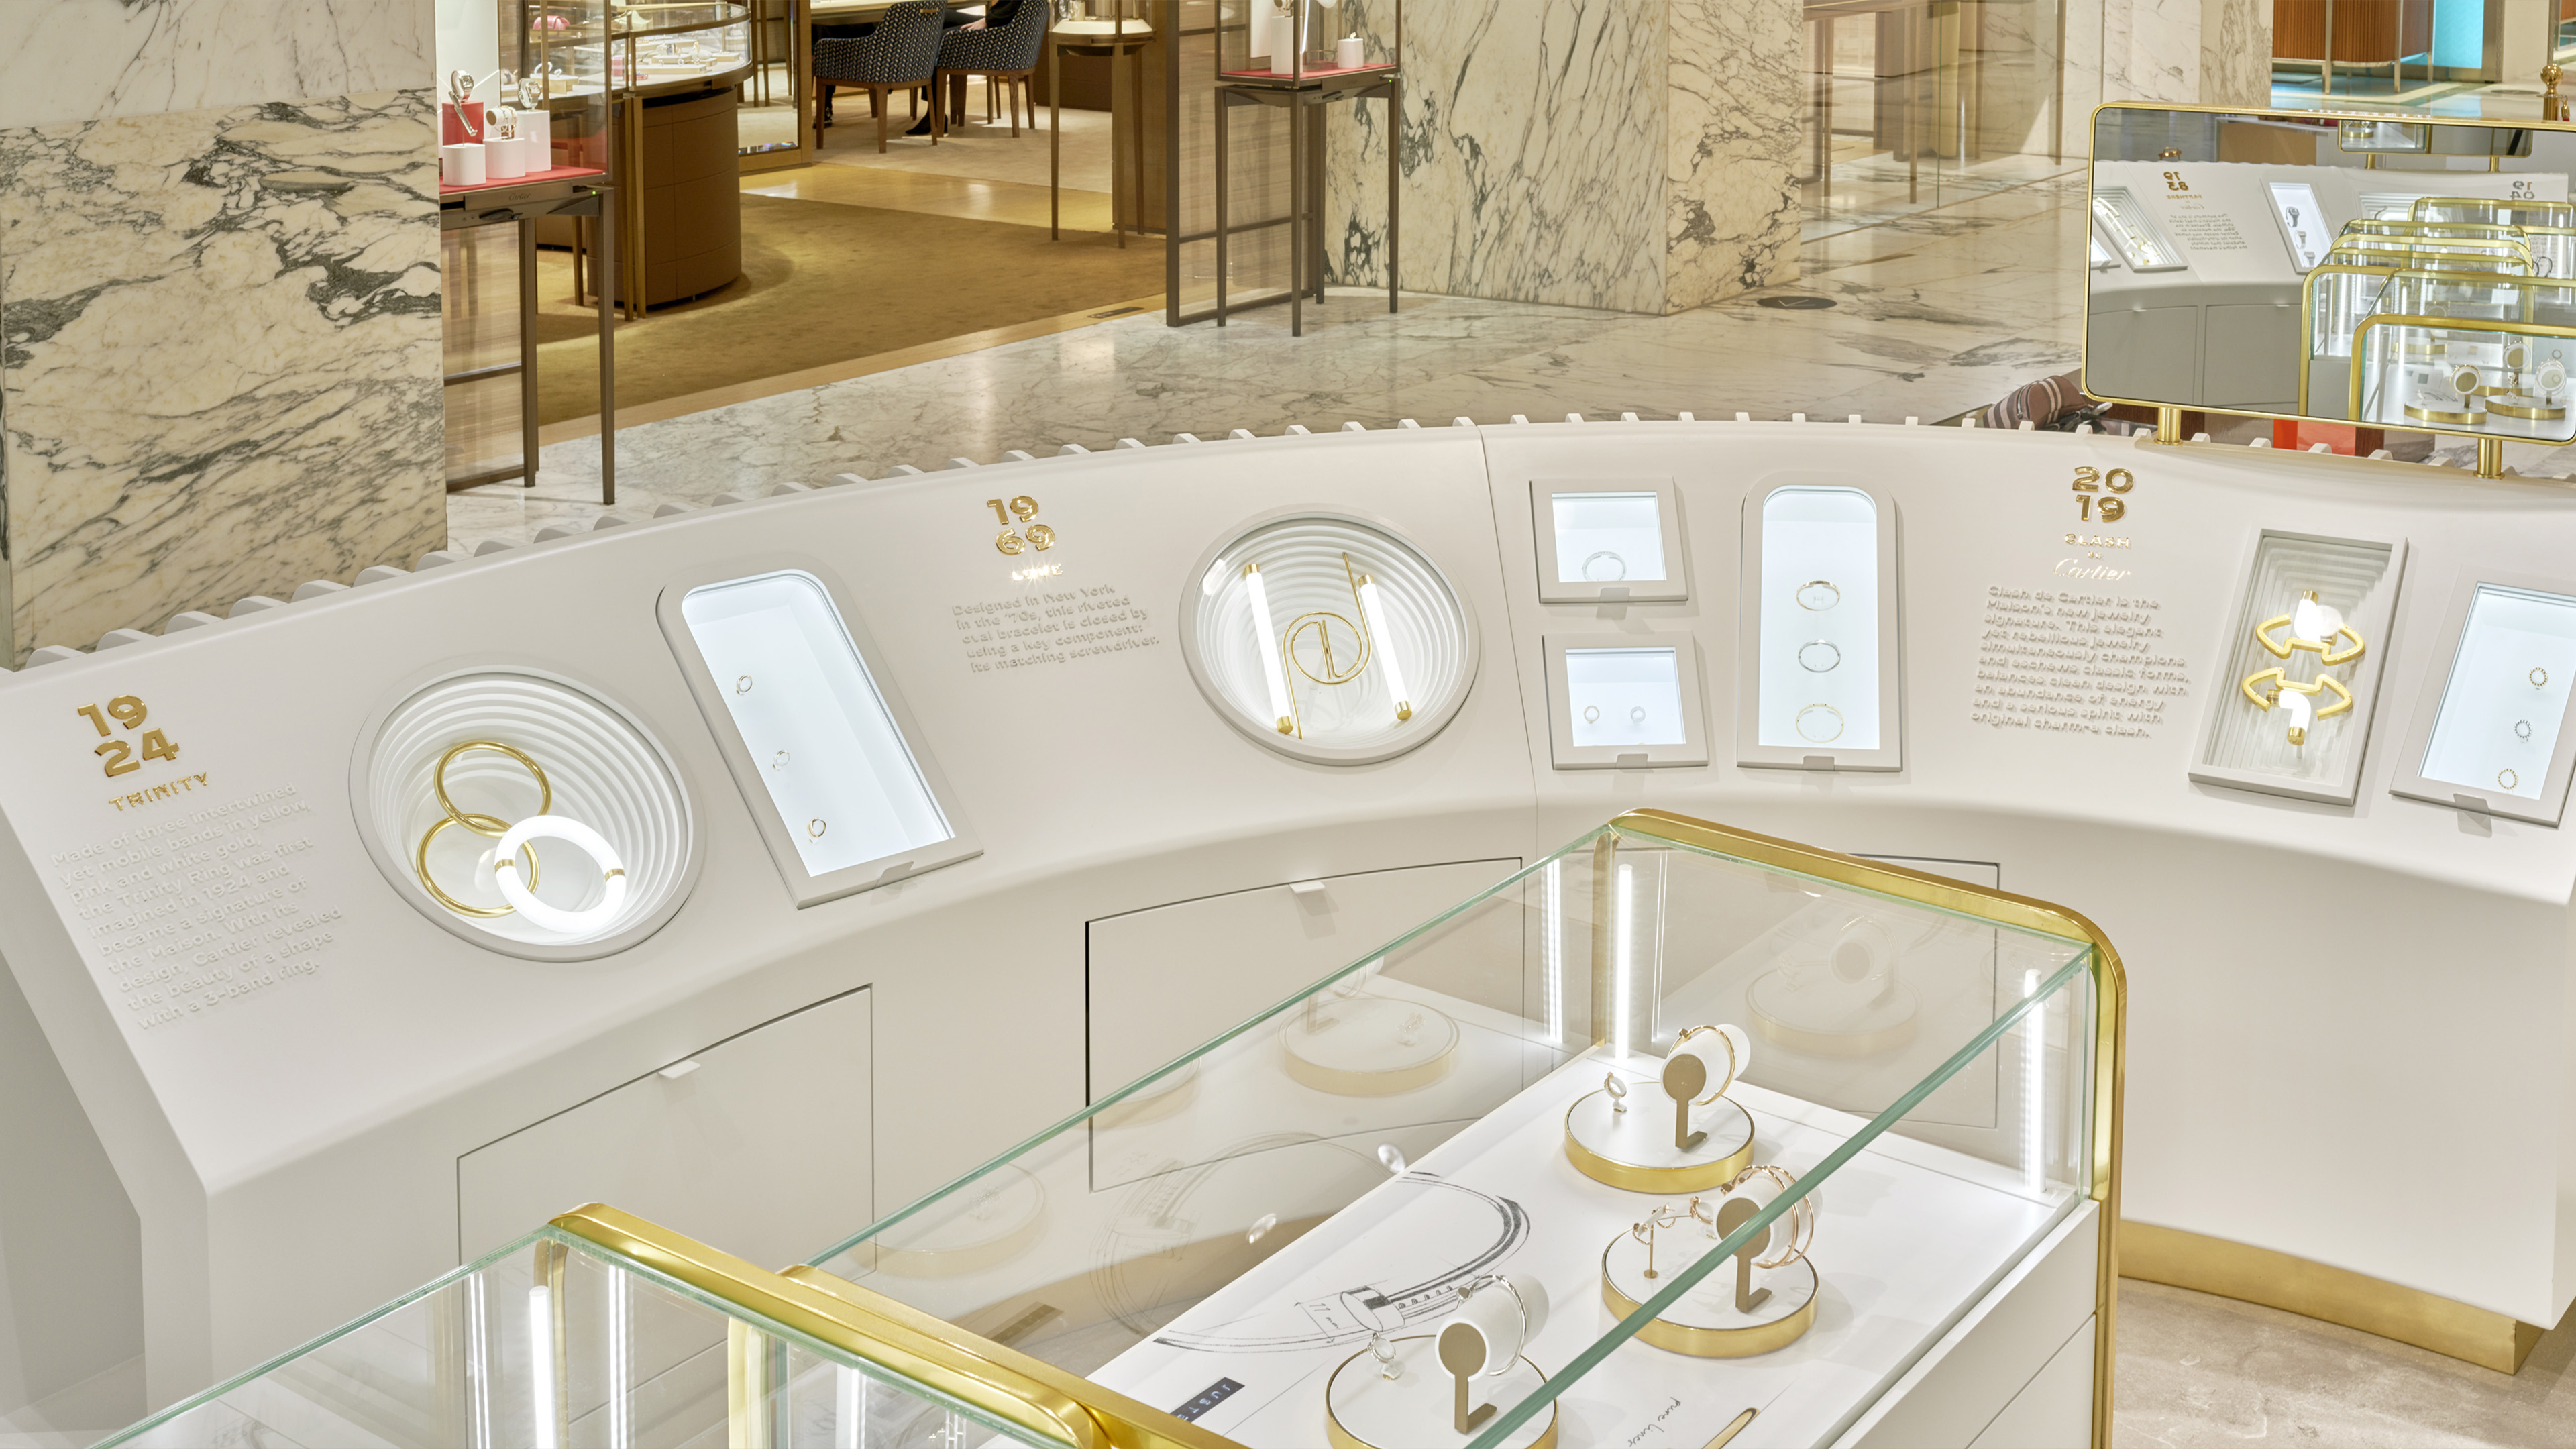 Cartier Opens Elegant Boutique in Amsterdam – Visual Merchandising